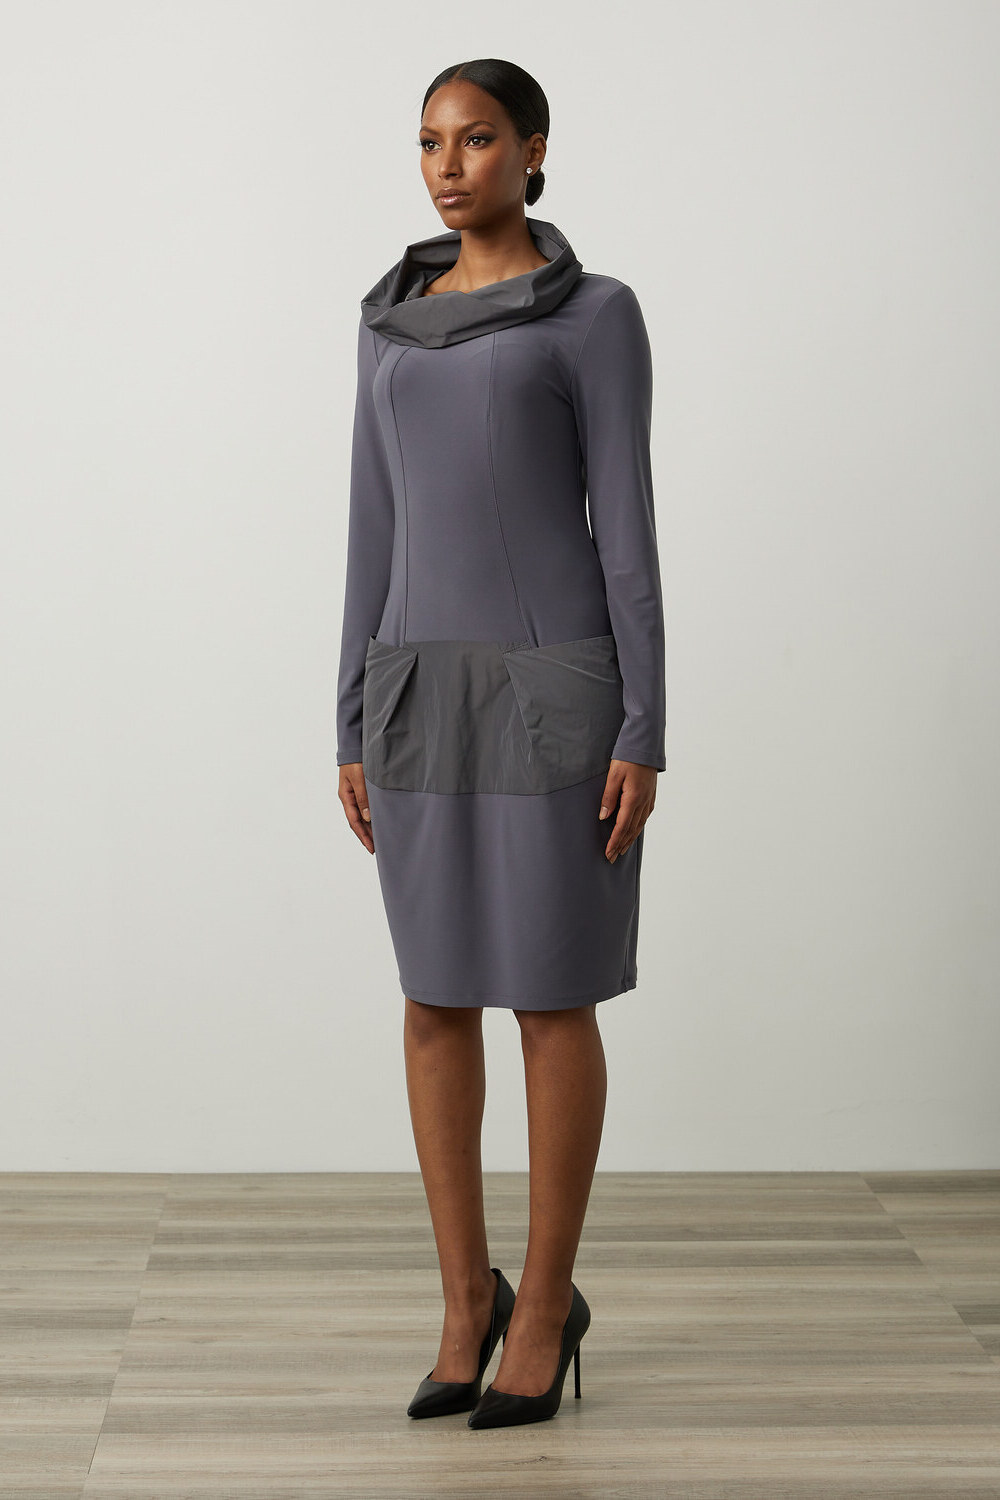 Joseph Ribkoff Tiered Detail Dress Style 213637. Granite